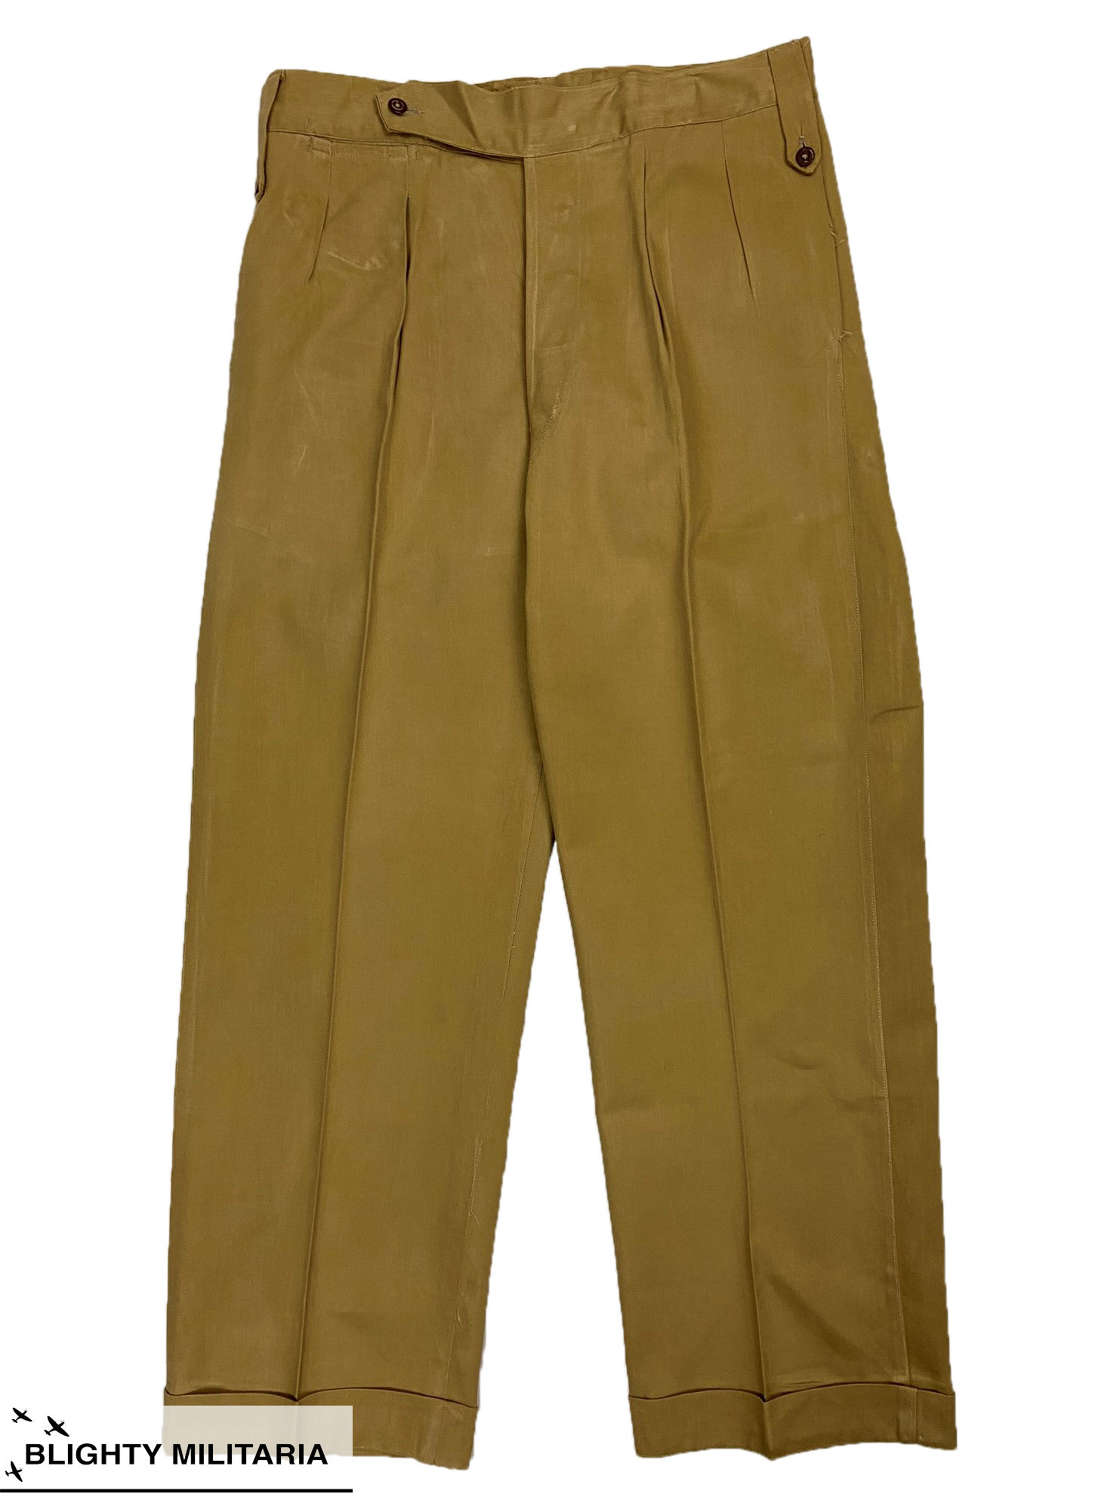 Original 1940s British Khaki Drill Trousers 34 x 29